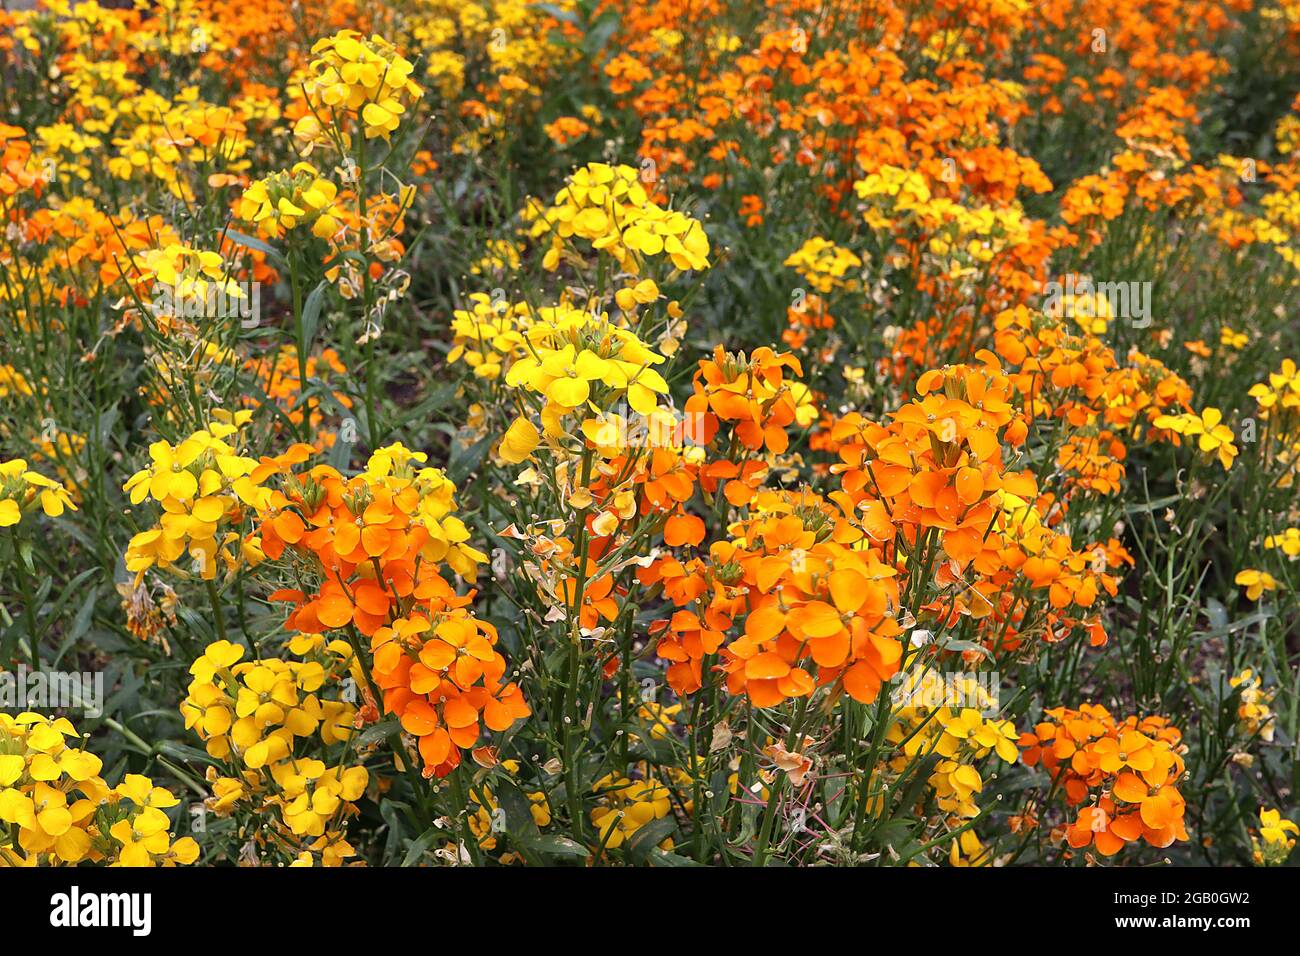 Erysimum allionii  Siberian wallflower – orange flowers on tall stems and dark green lance-shaped leaves,  June, England, UK Stock Photo